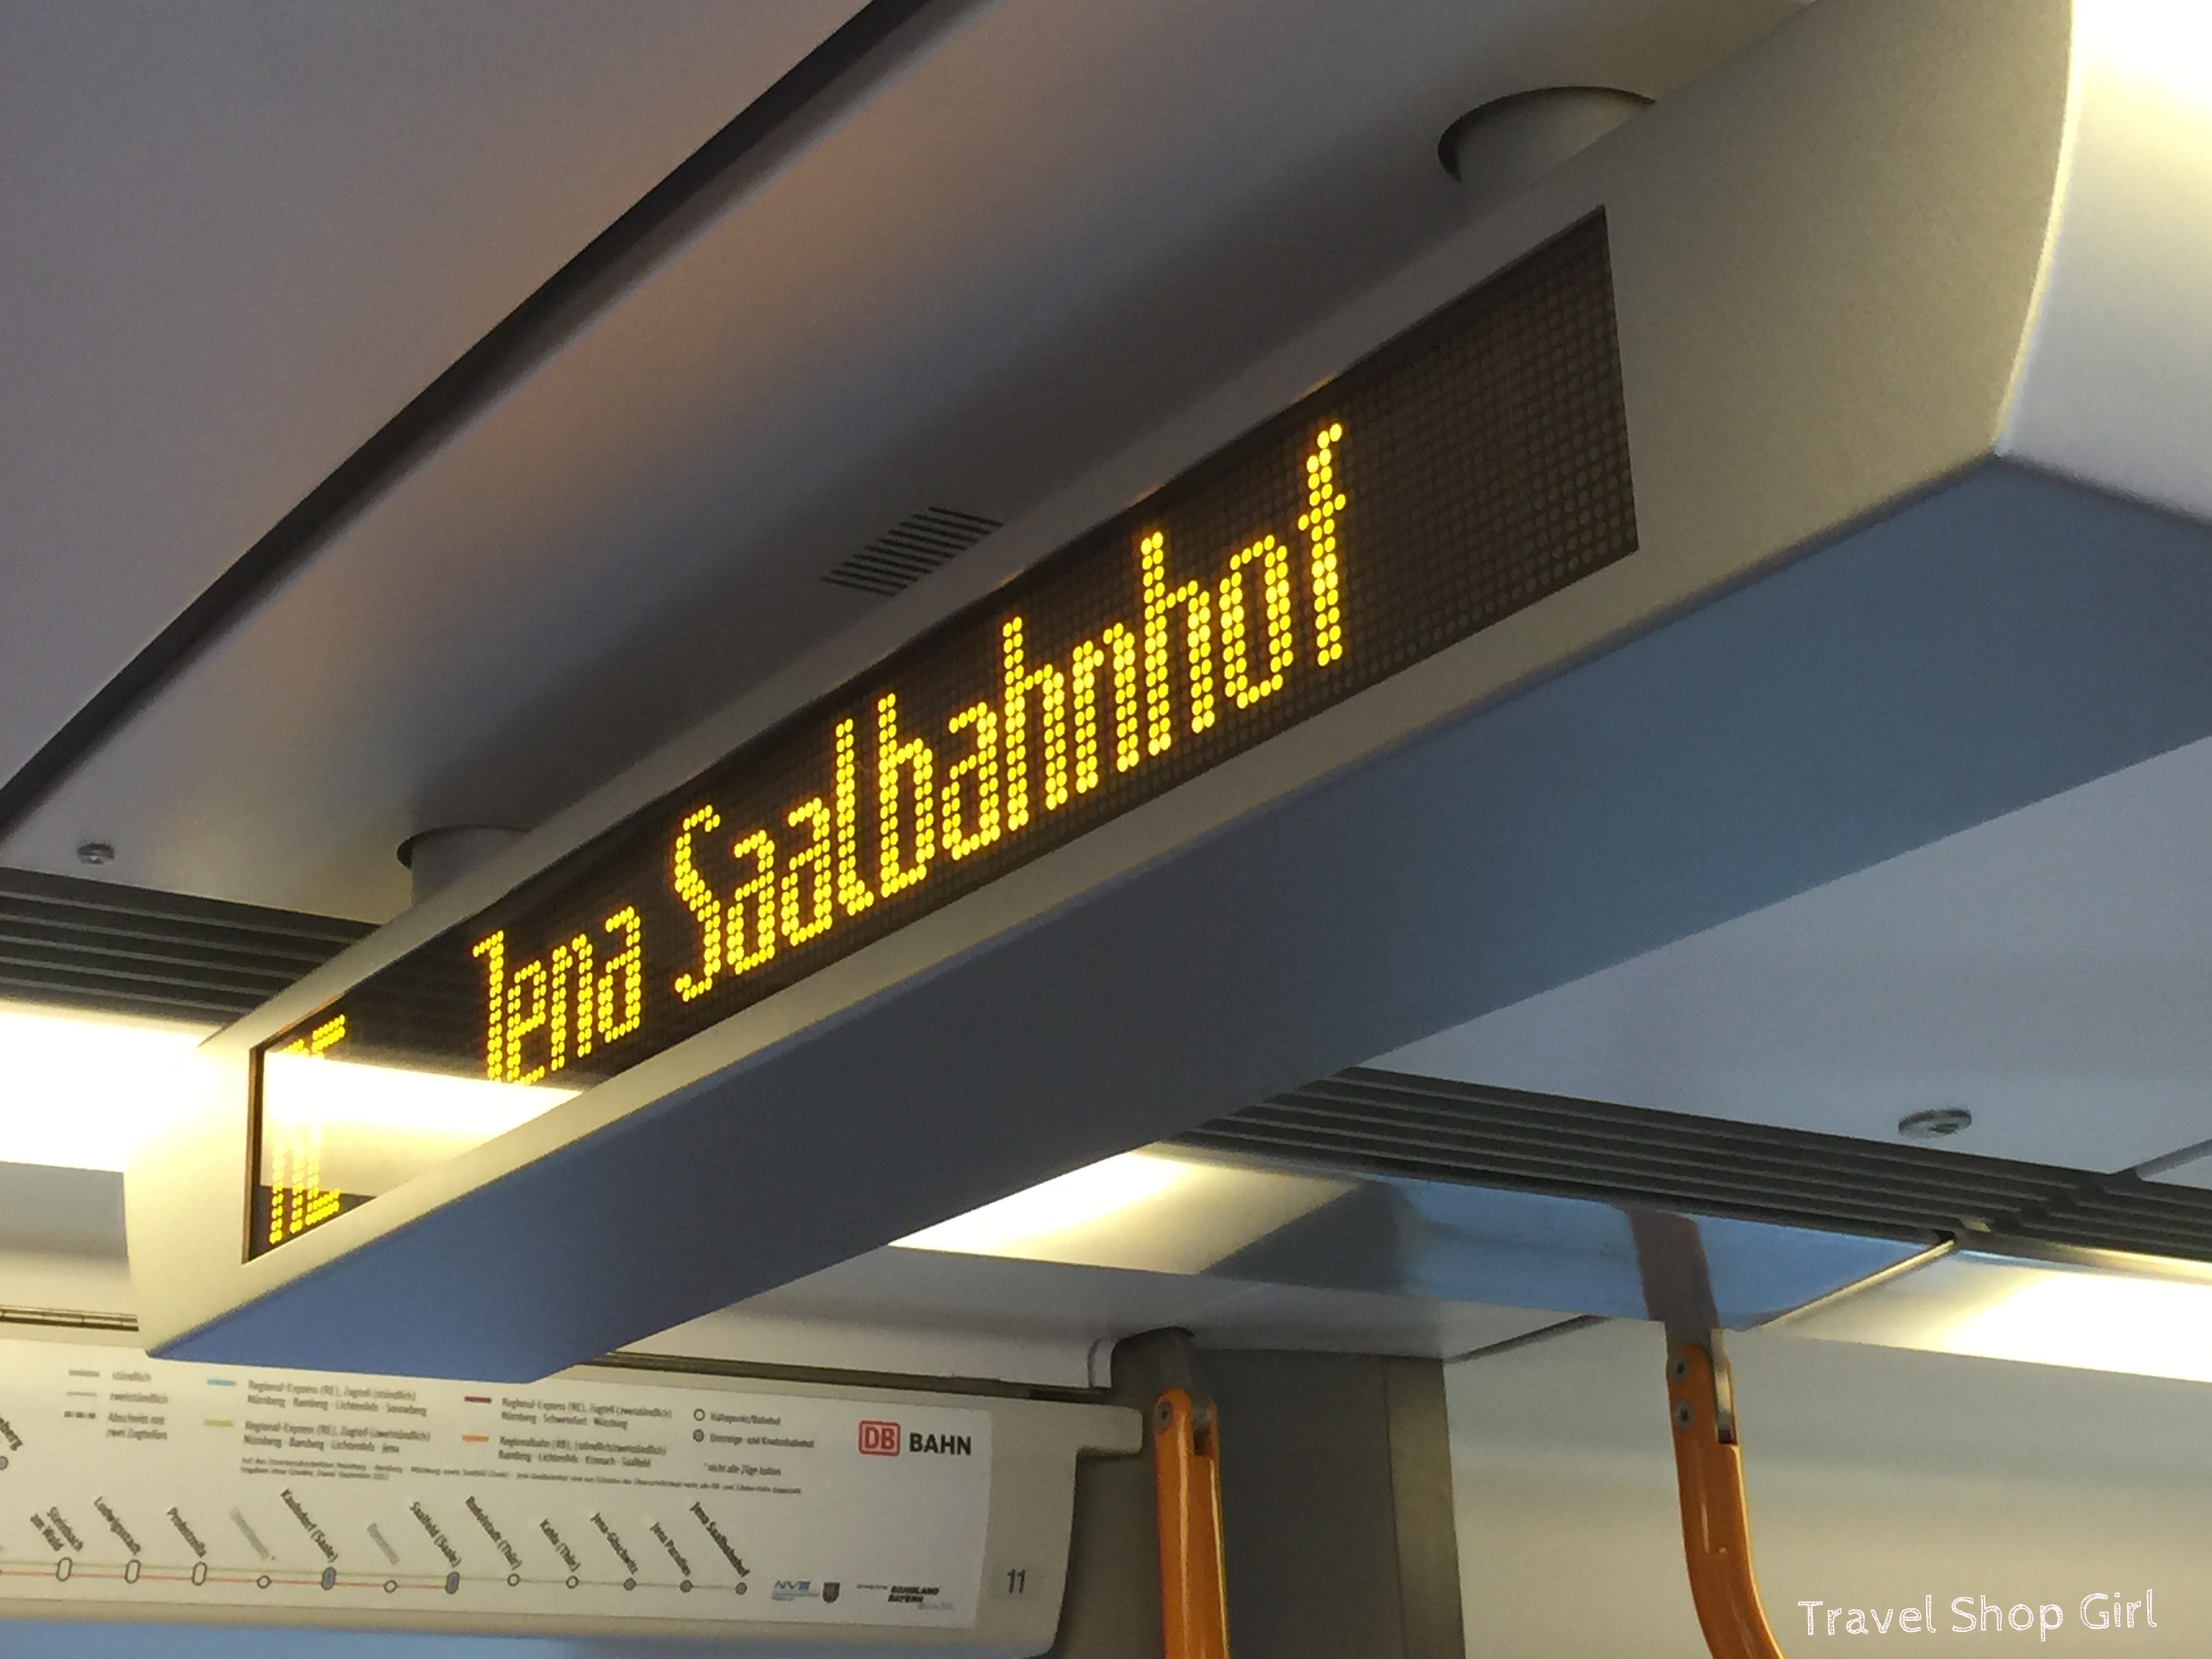 Taking the Train from Nuremberg to Erlangen